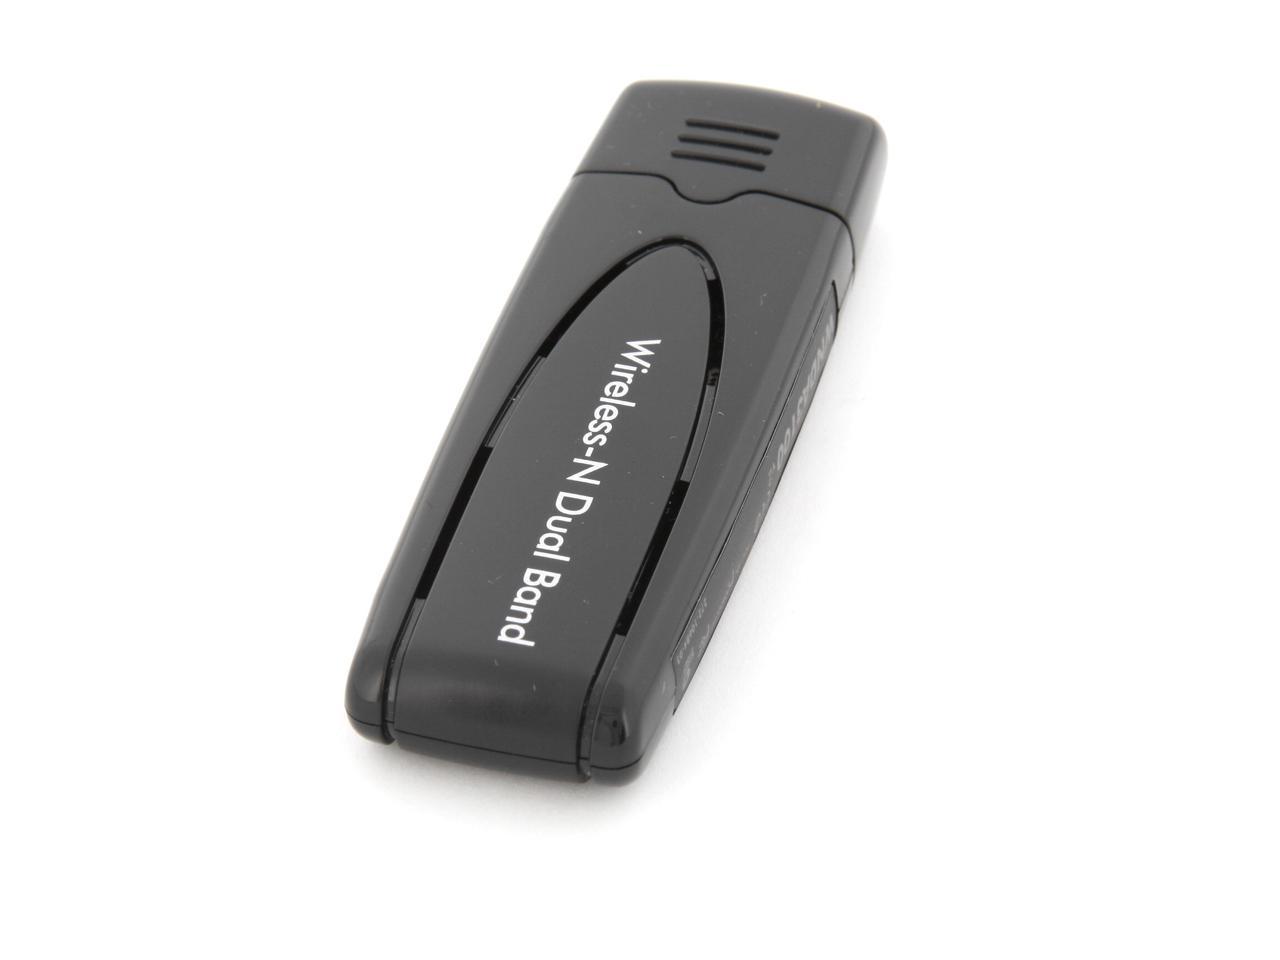 54 Mbps NETGEAR RangeMax WNDA3100-100NAS Dual Band Wireless-N USB 2.0 Adapter Renewed 